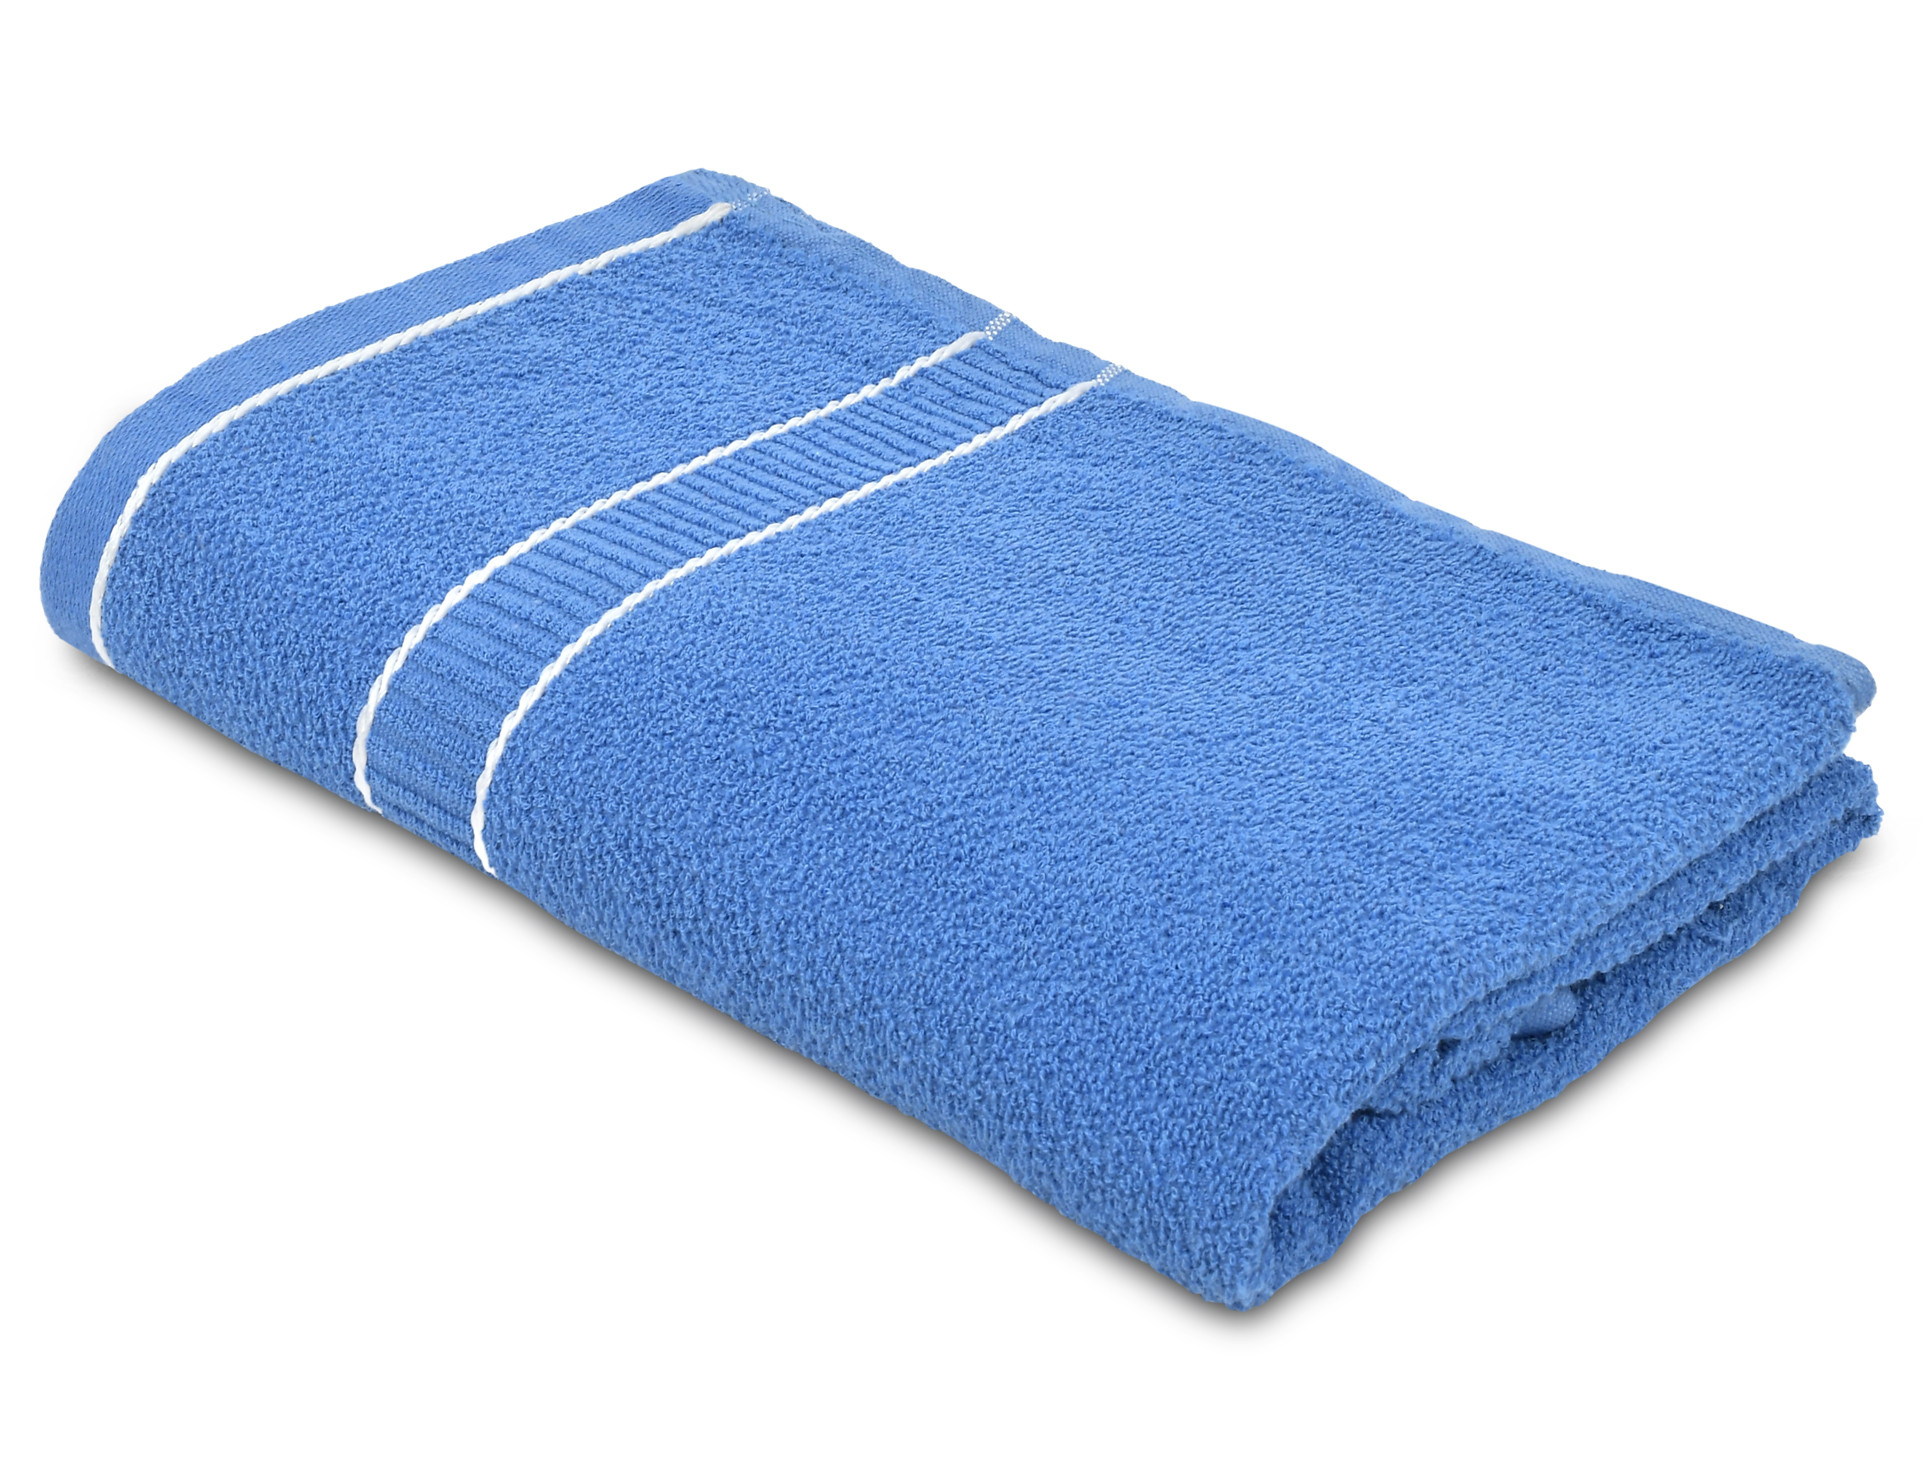 Kuber Industries Luxurious, Soft Cotton Bath Towel, 30